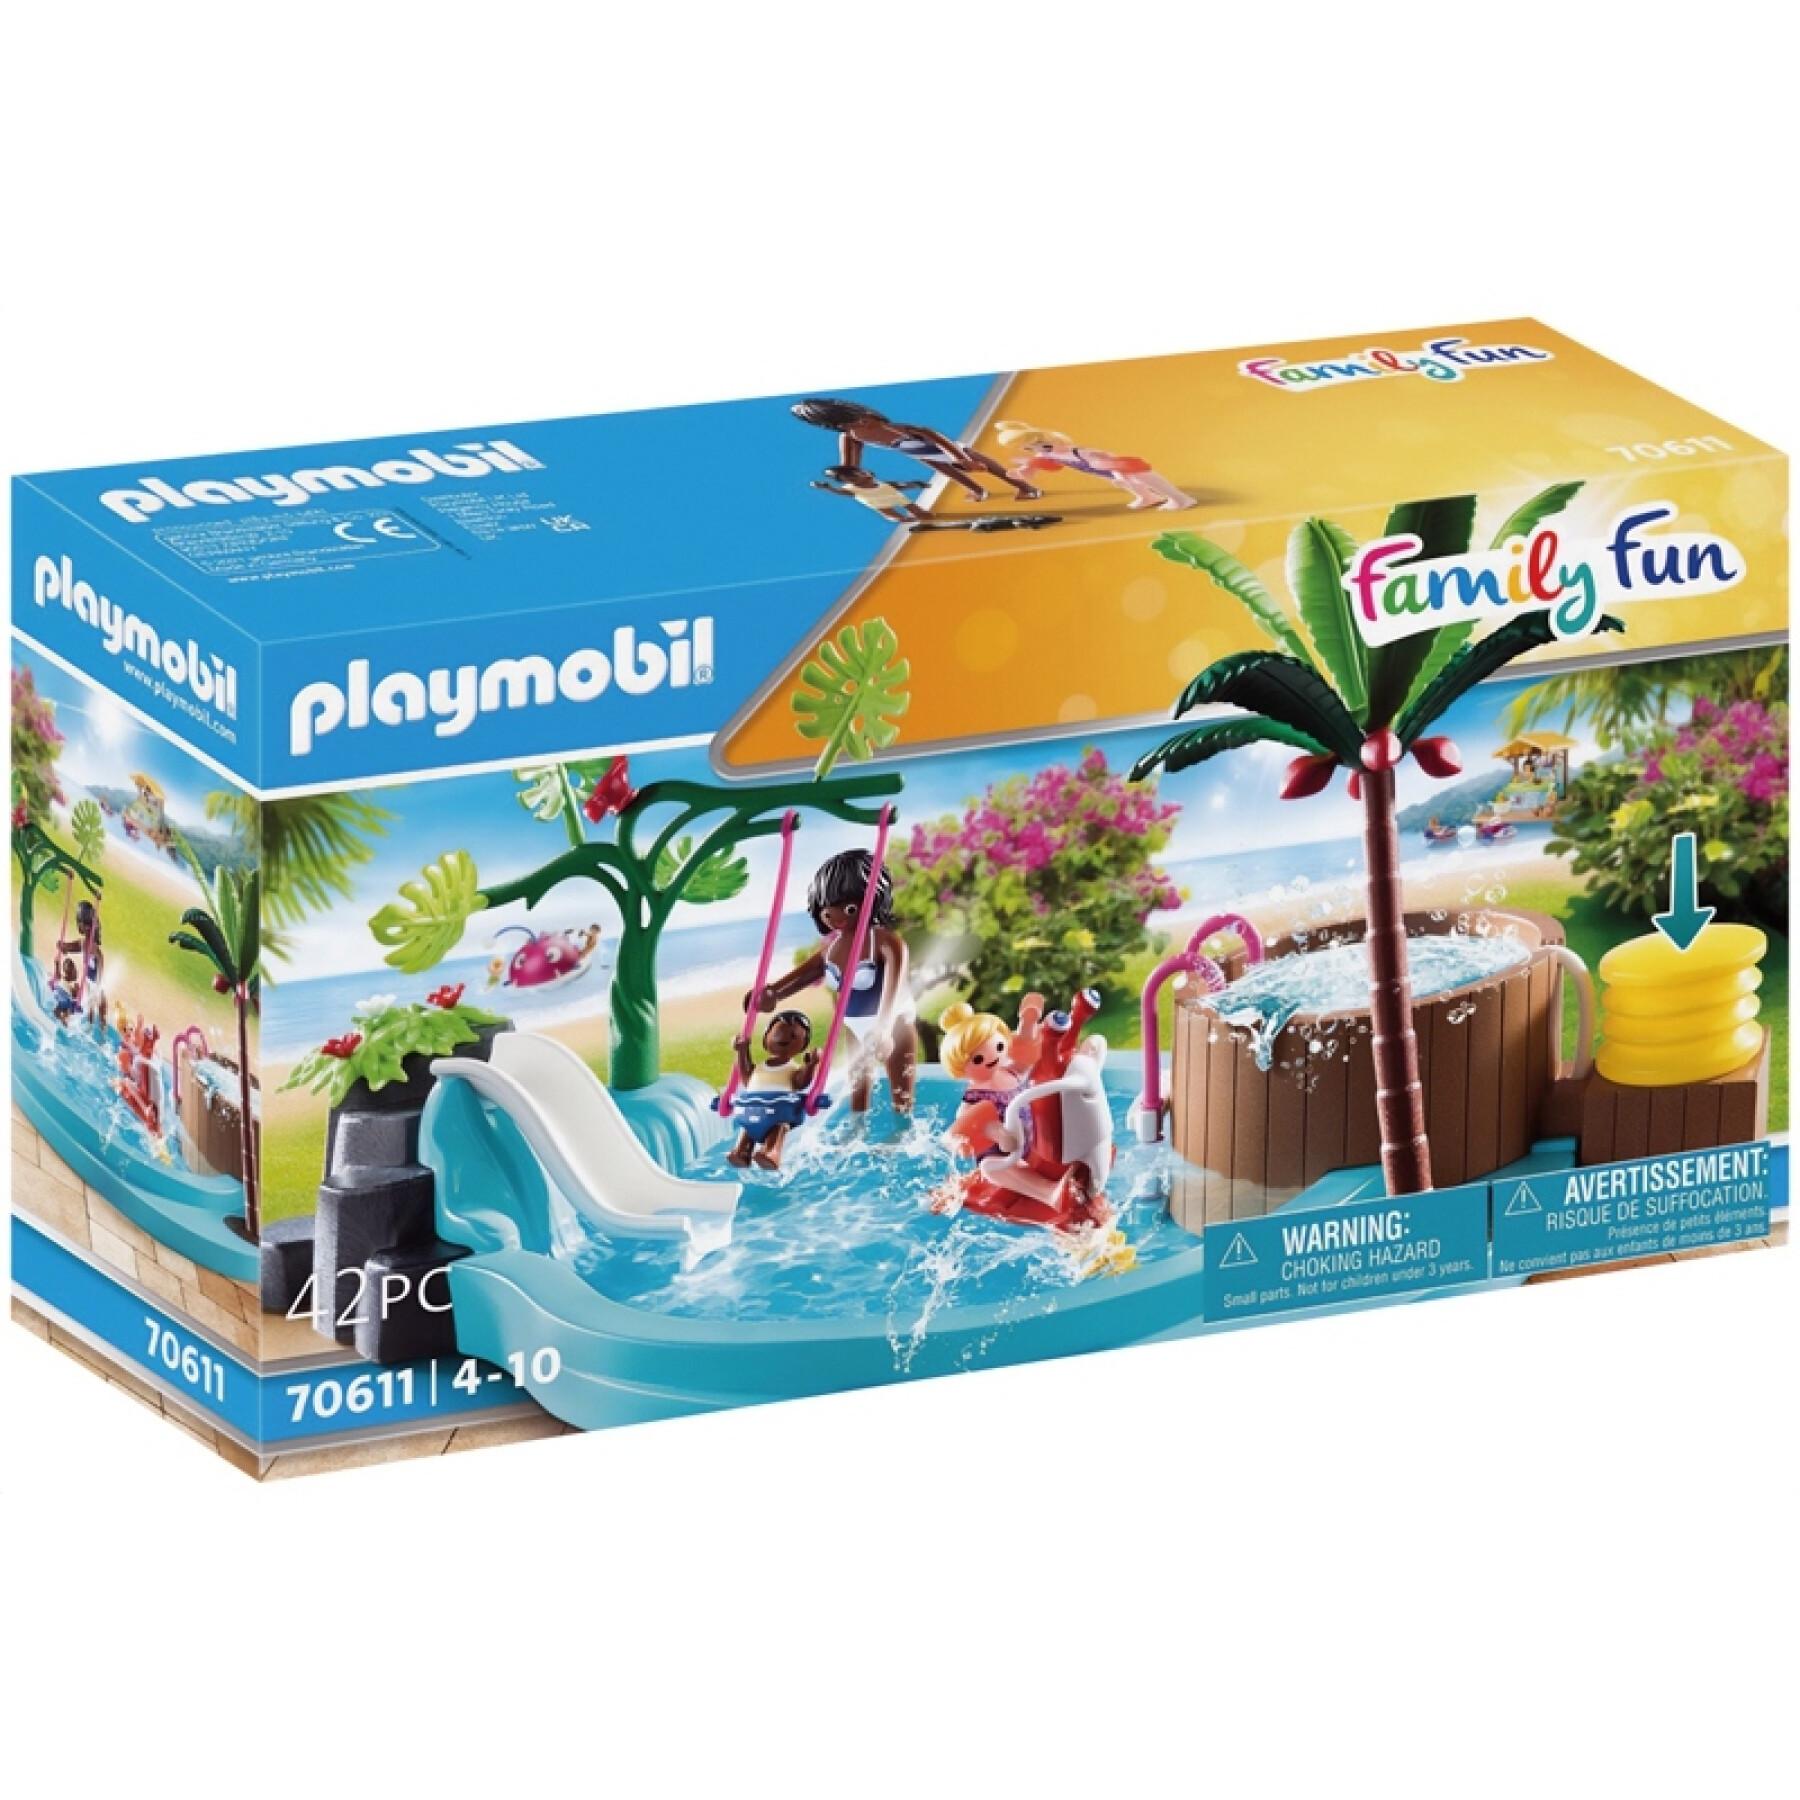 Paddling pool with bubble bath Playmobil